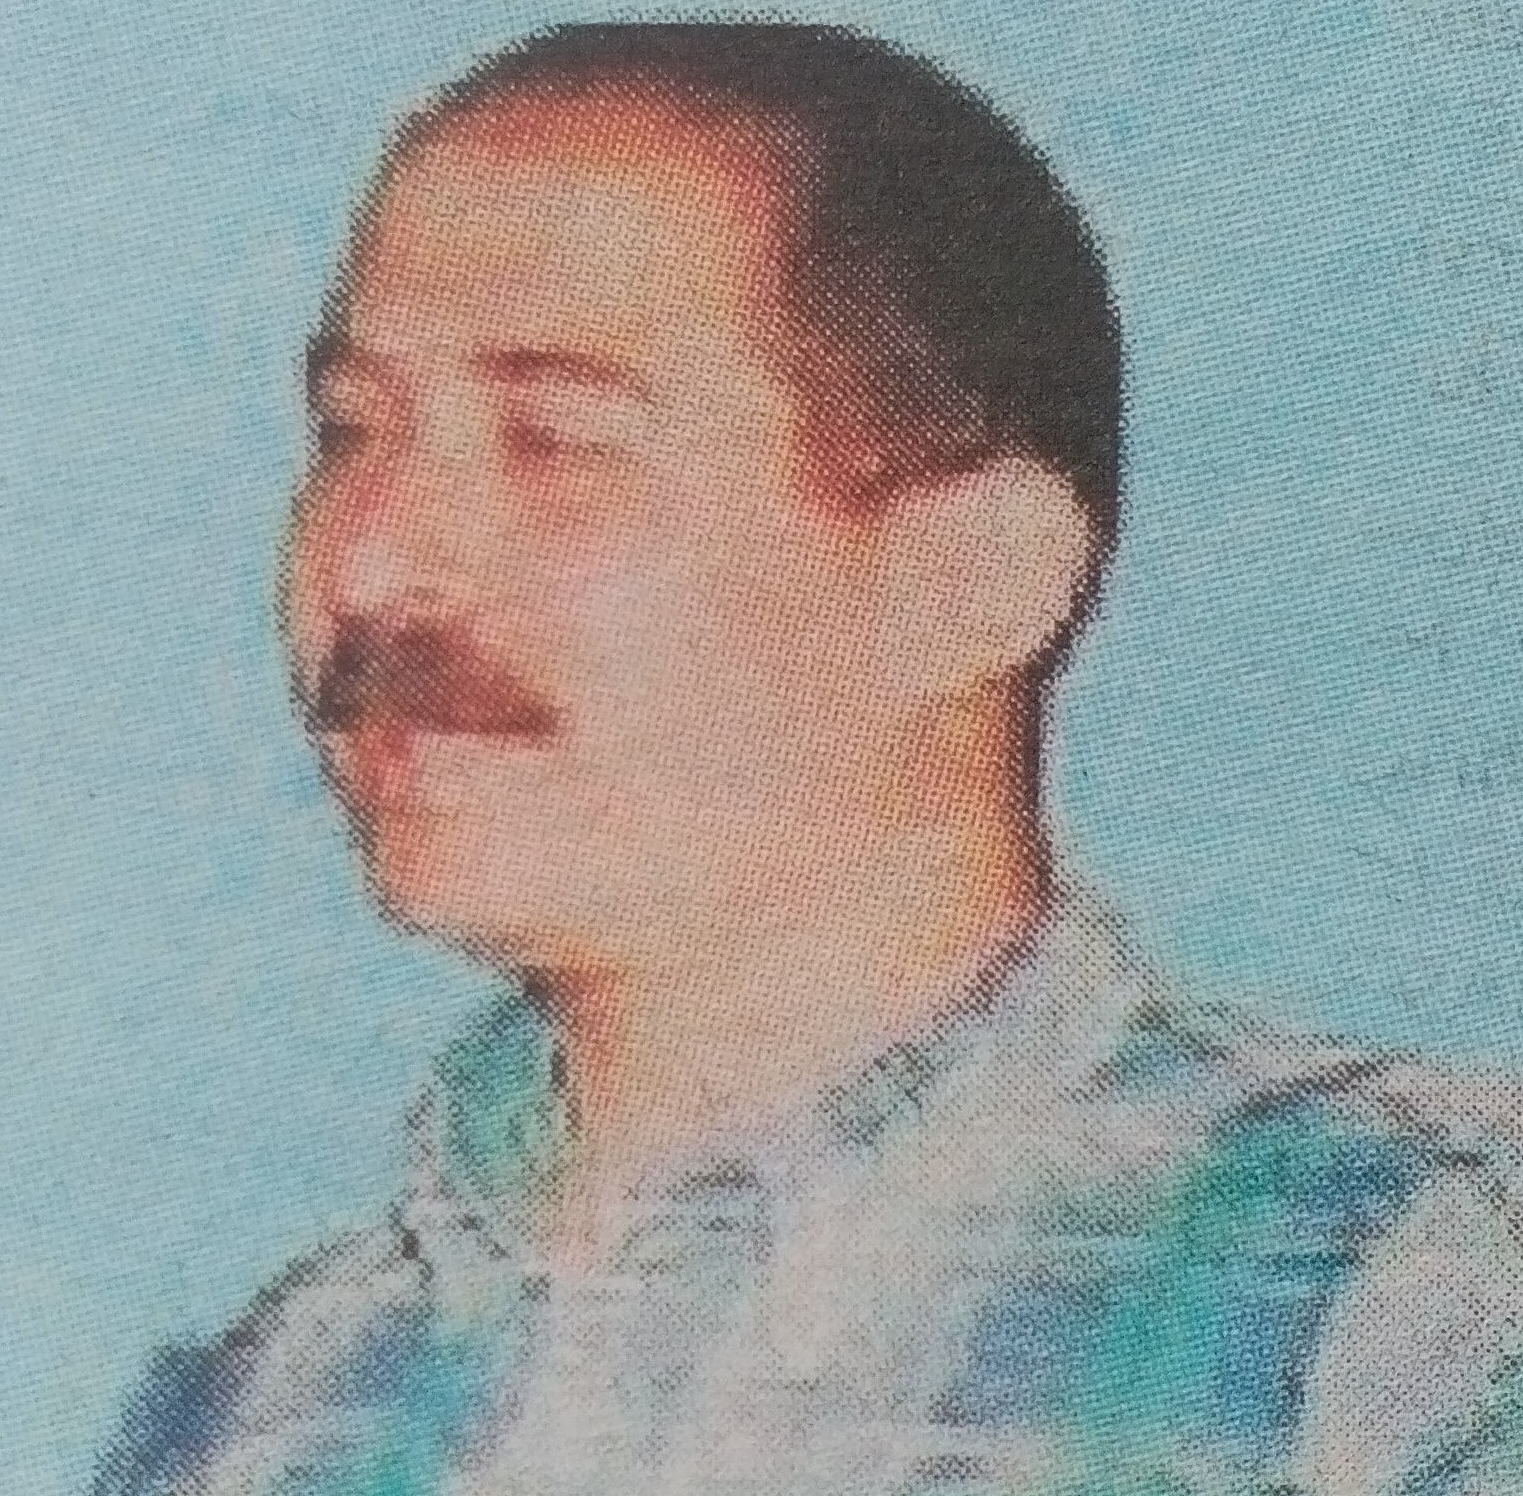 Obituary Image of George Shenouda Abanoub Kyrillos